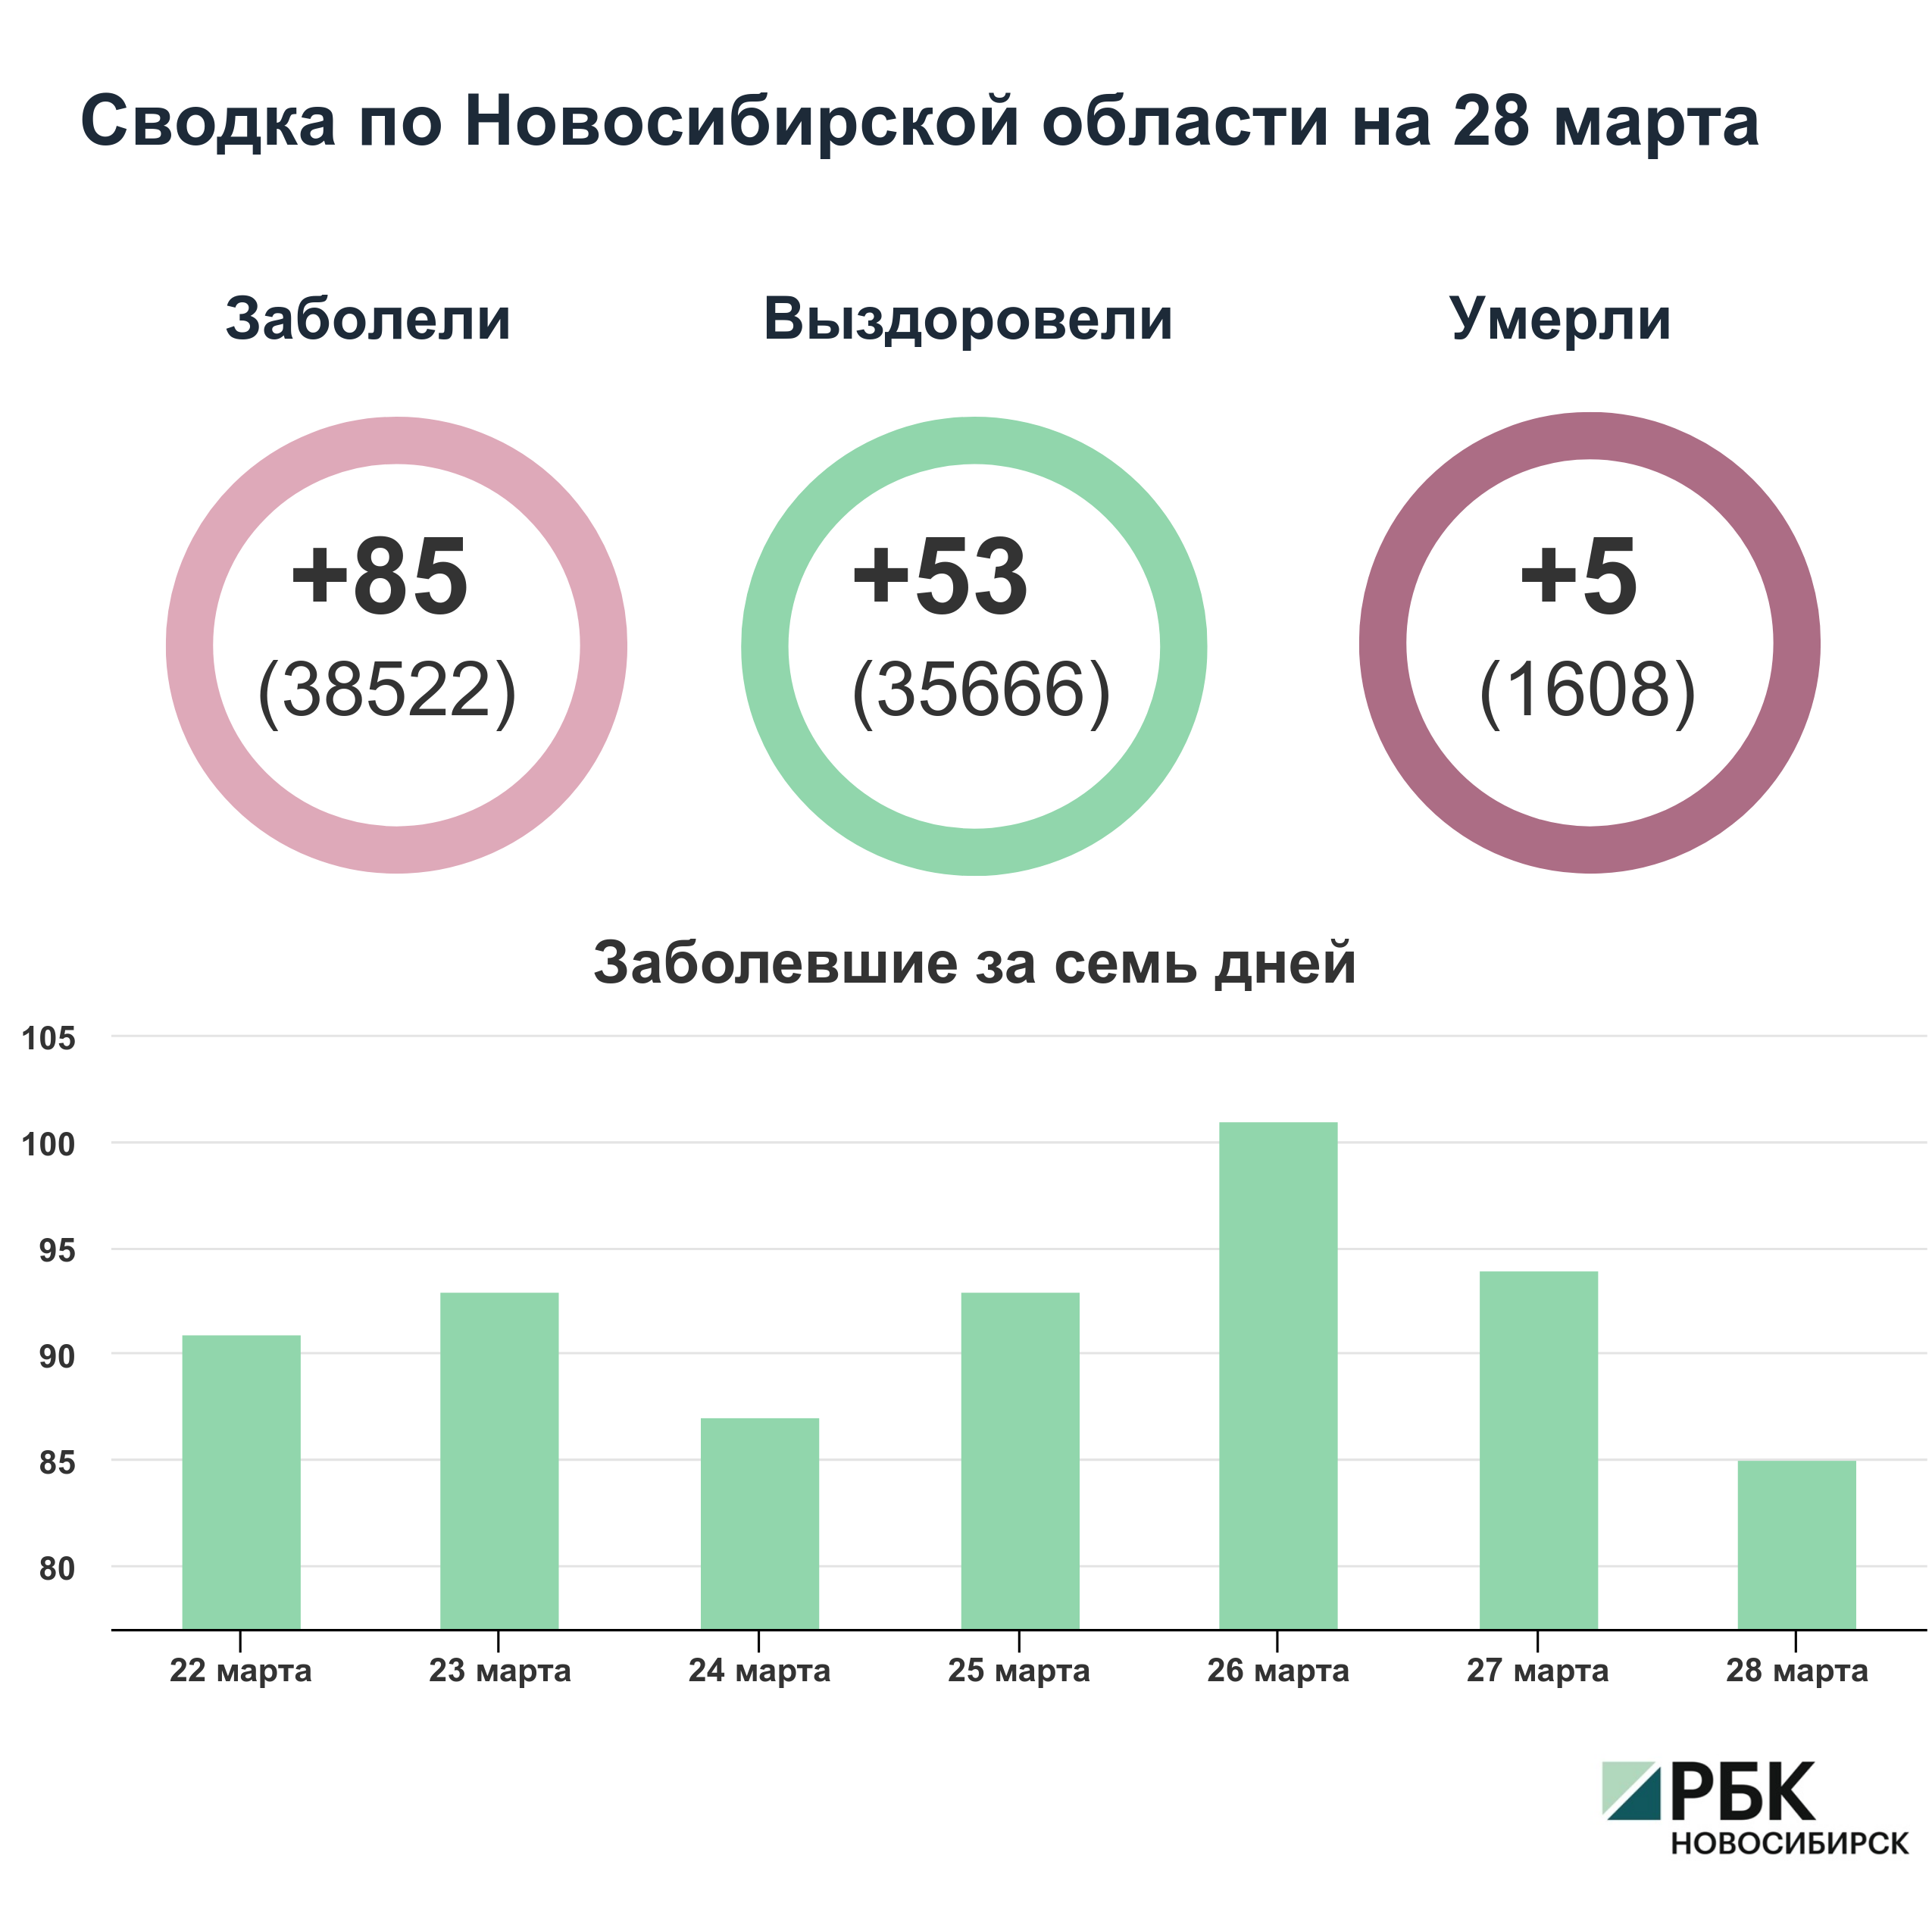 Коронавирус в Новосибирске: сводка на 28 марта